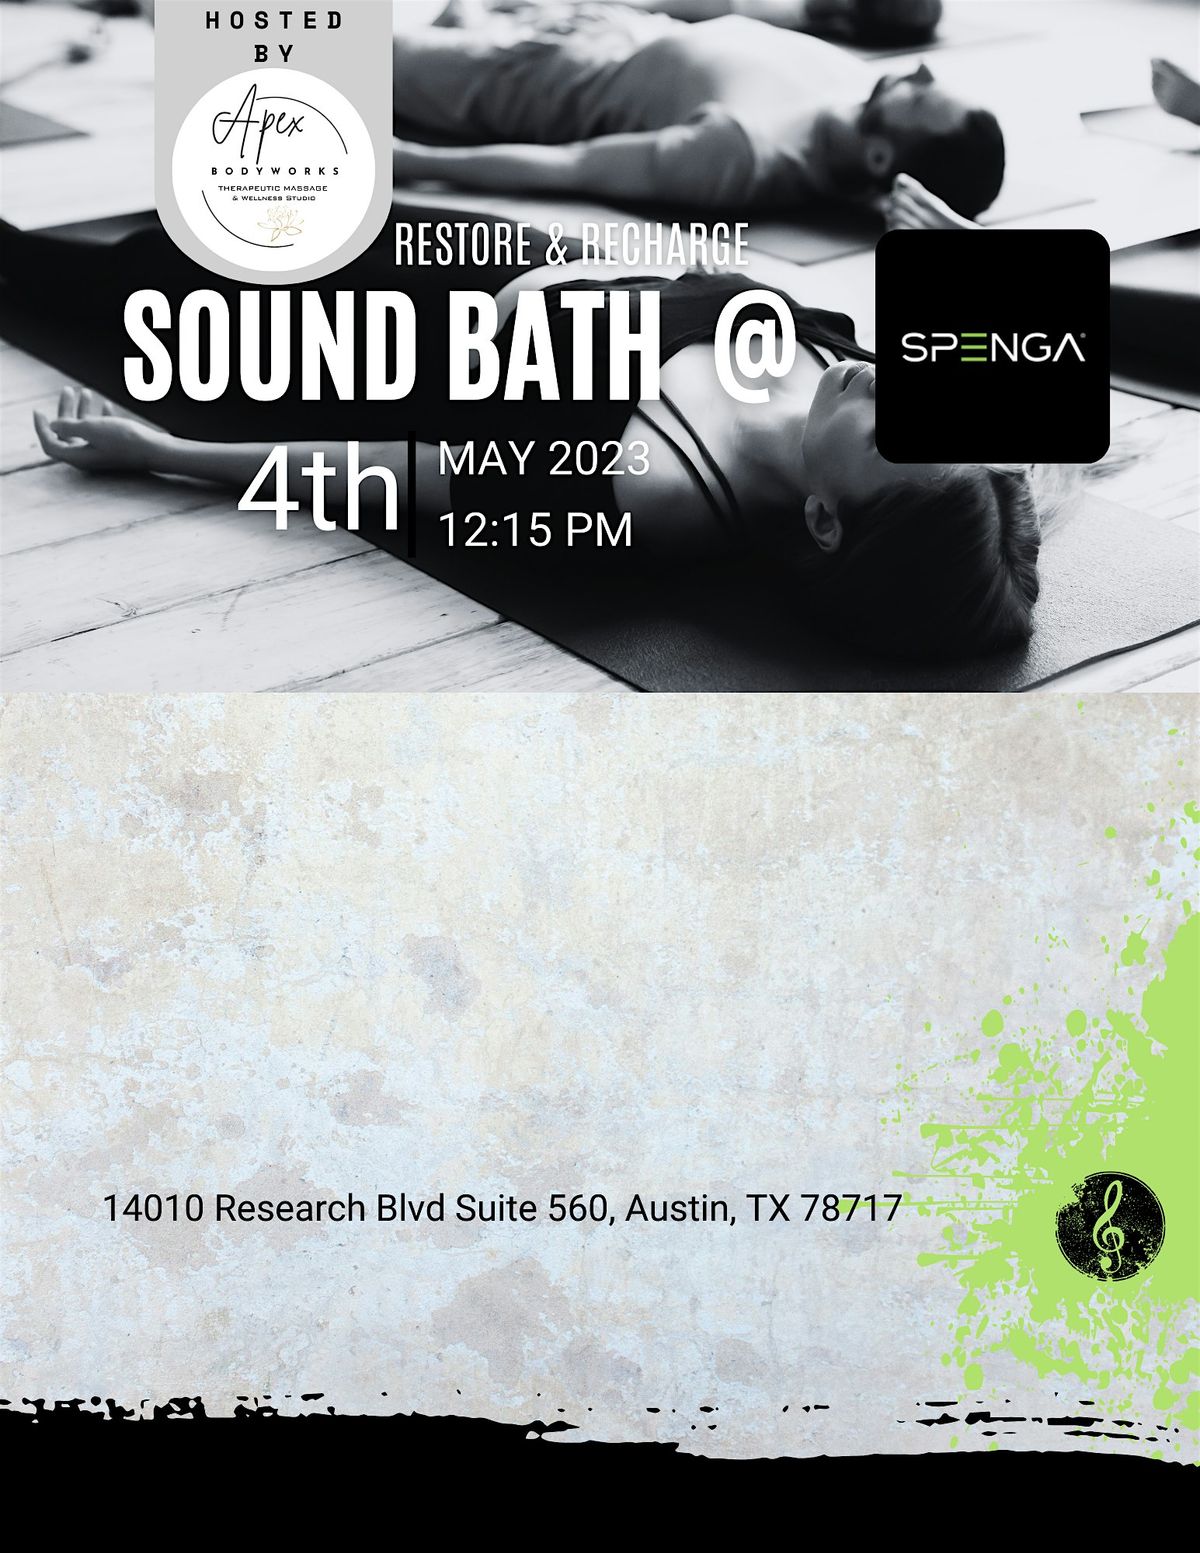 Restore & Recharge Sound Bath